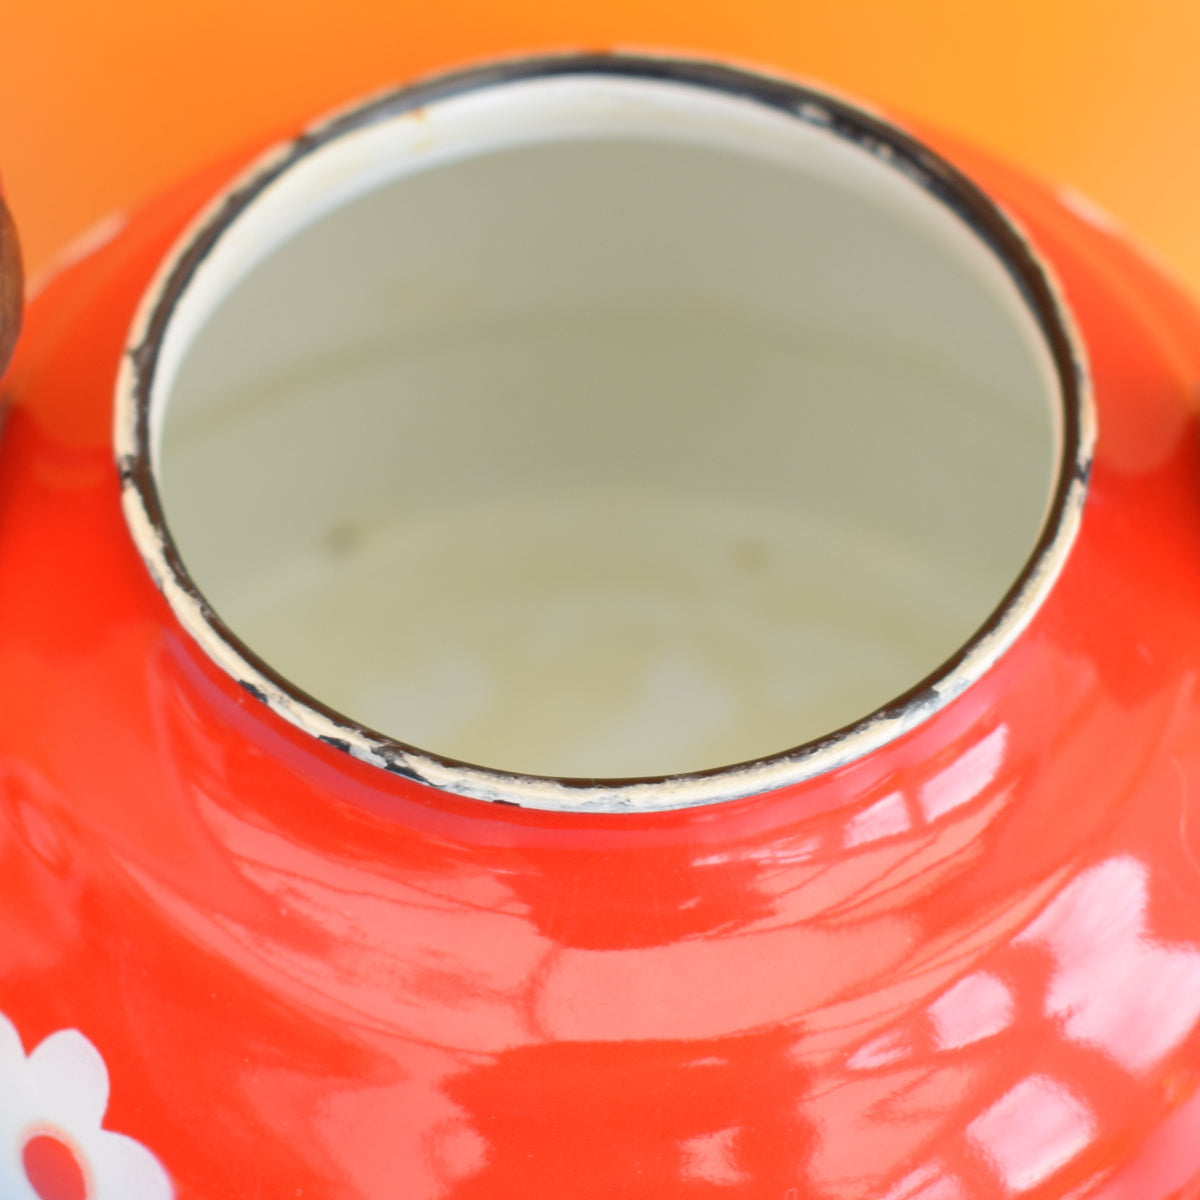 Vintage 1960s Small Enamel Tea Pot / Kettle - Red Flower Power